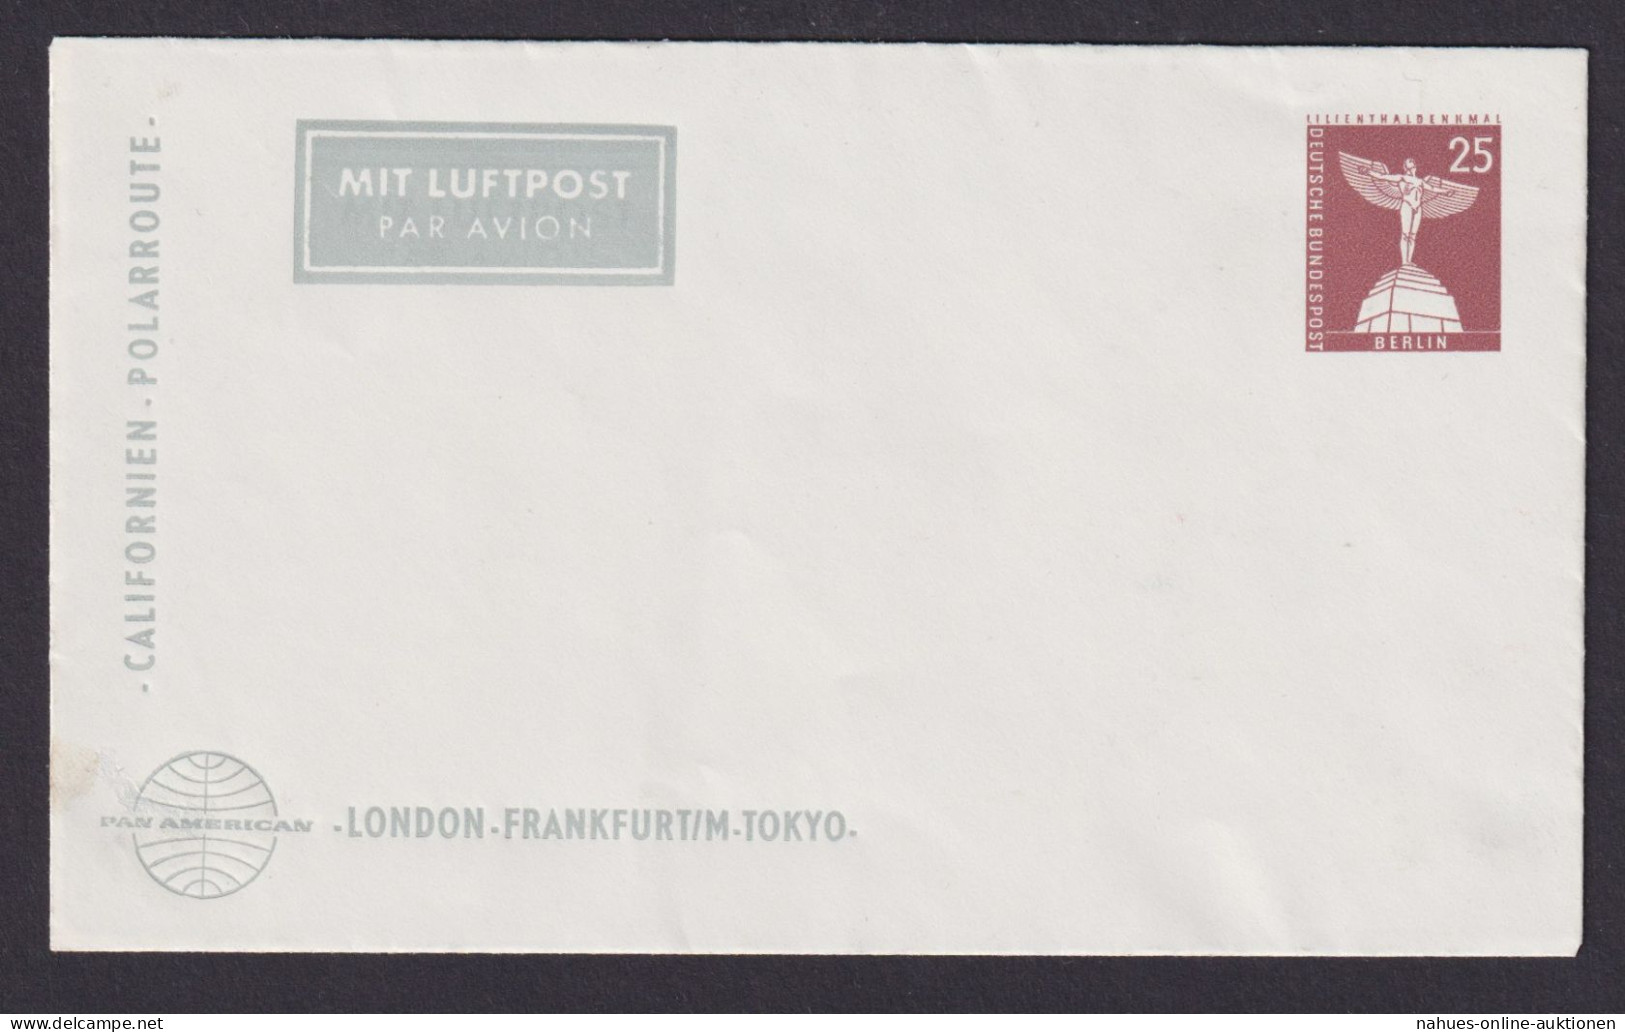 Flugpost Brief Air Mail Berlin Privatganzsache Bauwerke Pan Amerika London - Private Covers - Mint